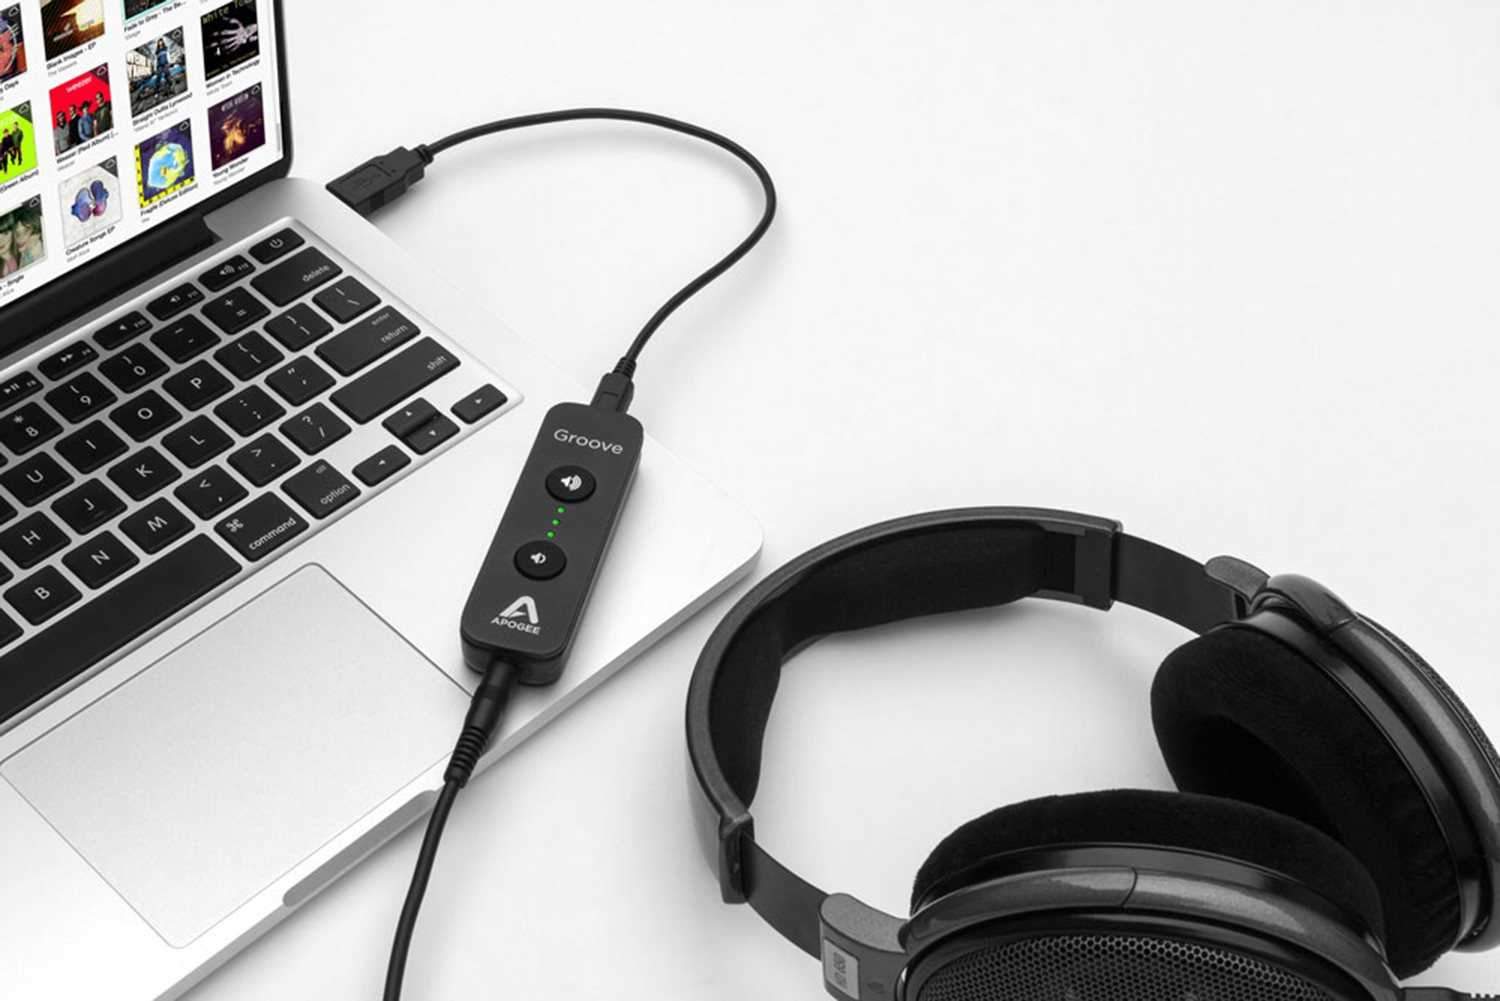 Apogee Groove USB Audio Interface & Headphone Amp - ProSound and Stage Lighting